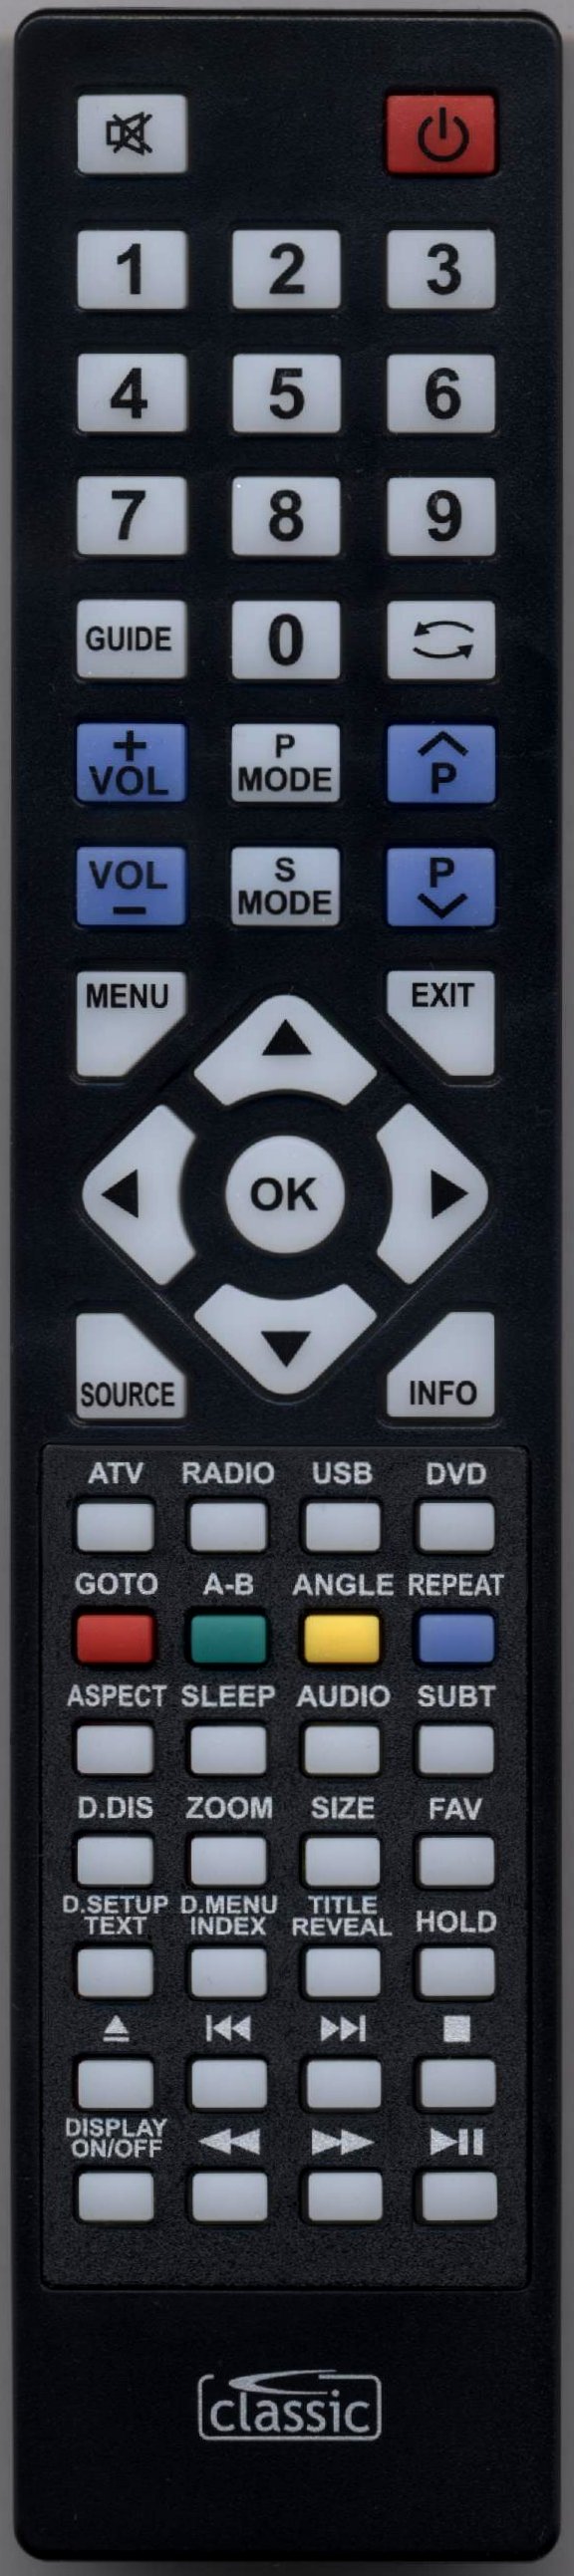 UMC X32/56G-GB-TCU-UK Remote Control Alternative